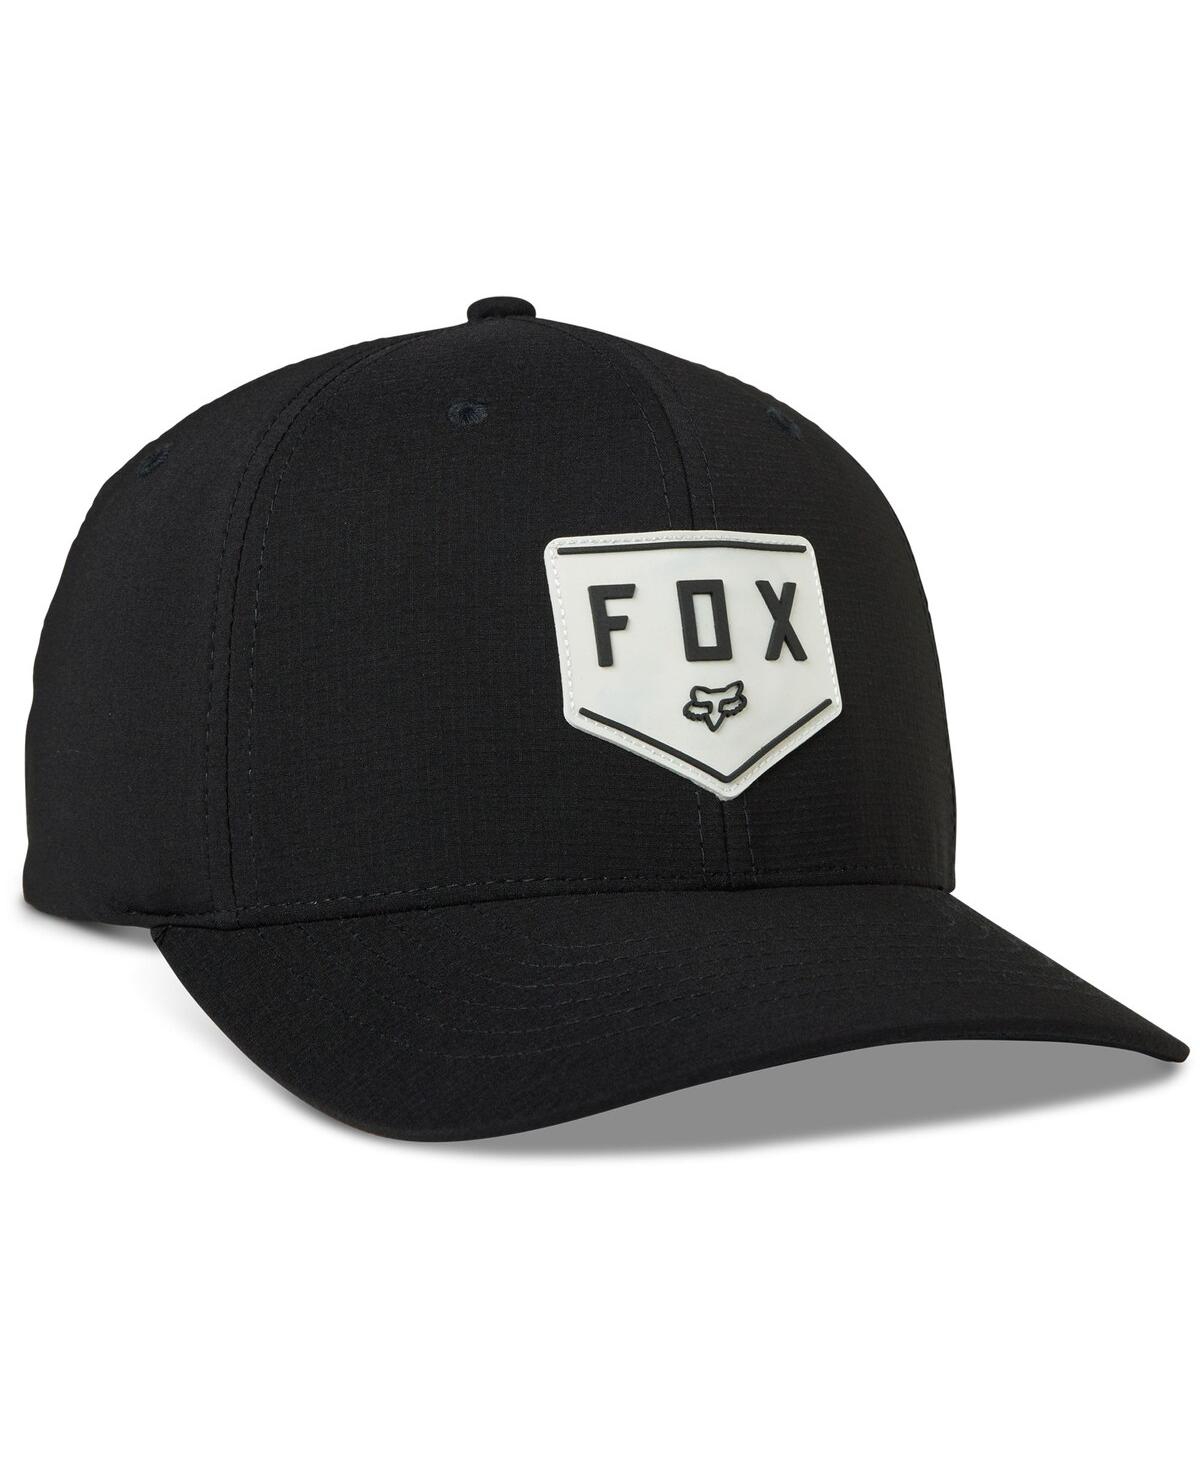 Men's Fox Black Shield Tech Flex Hat - Black